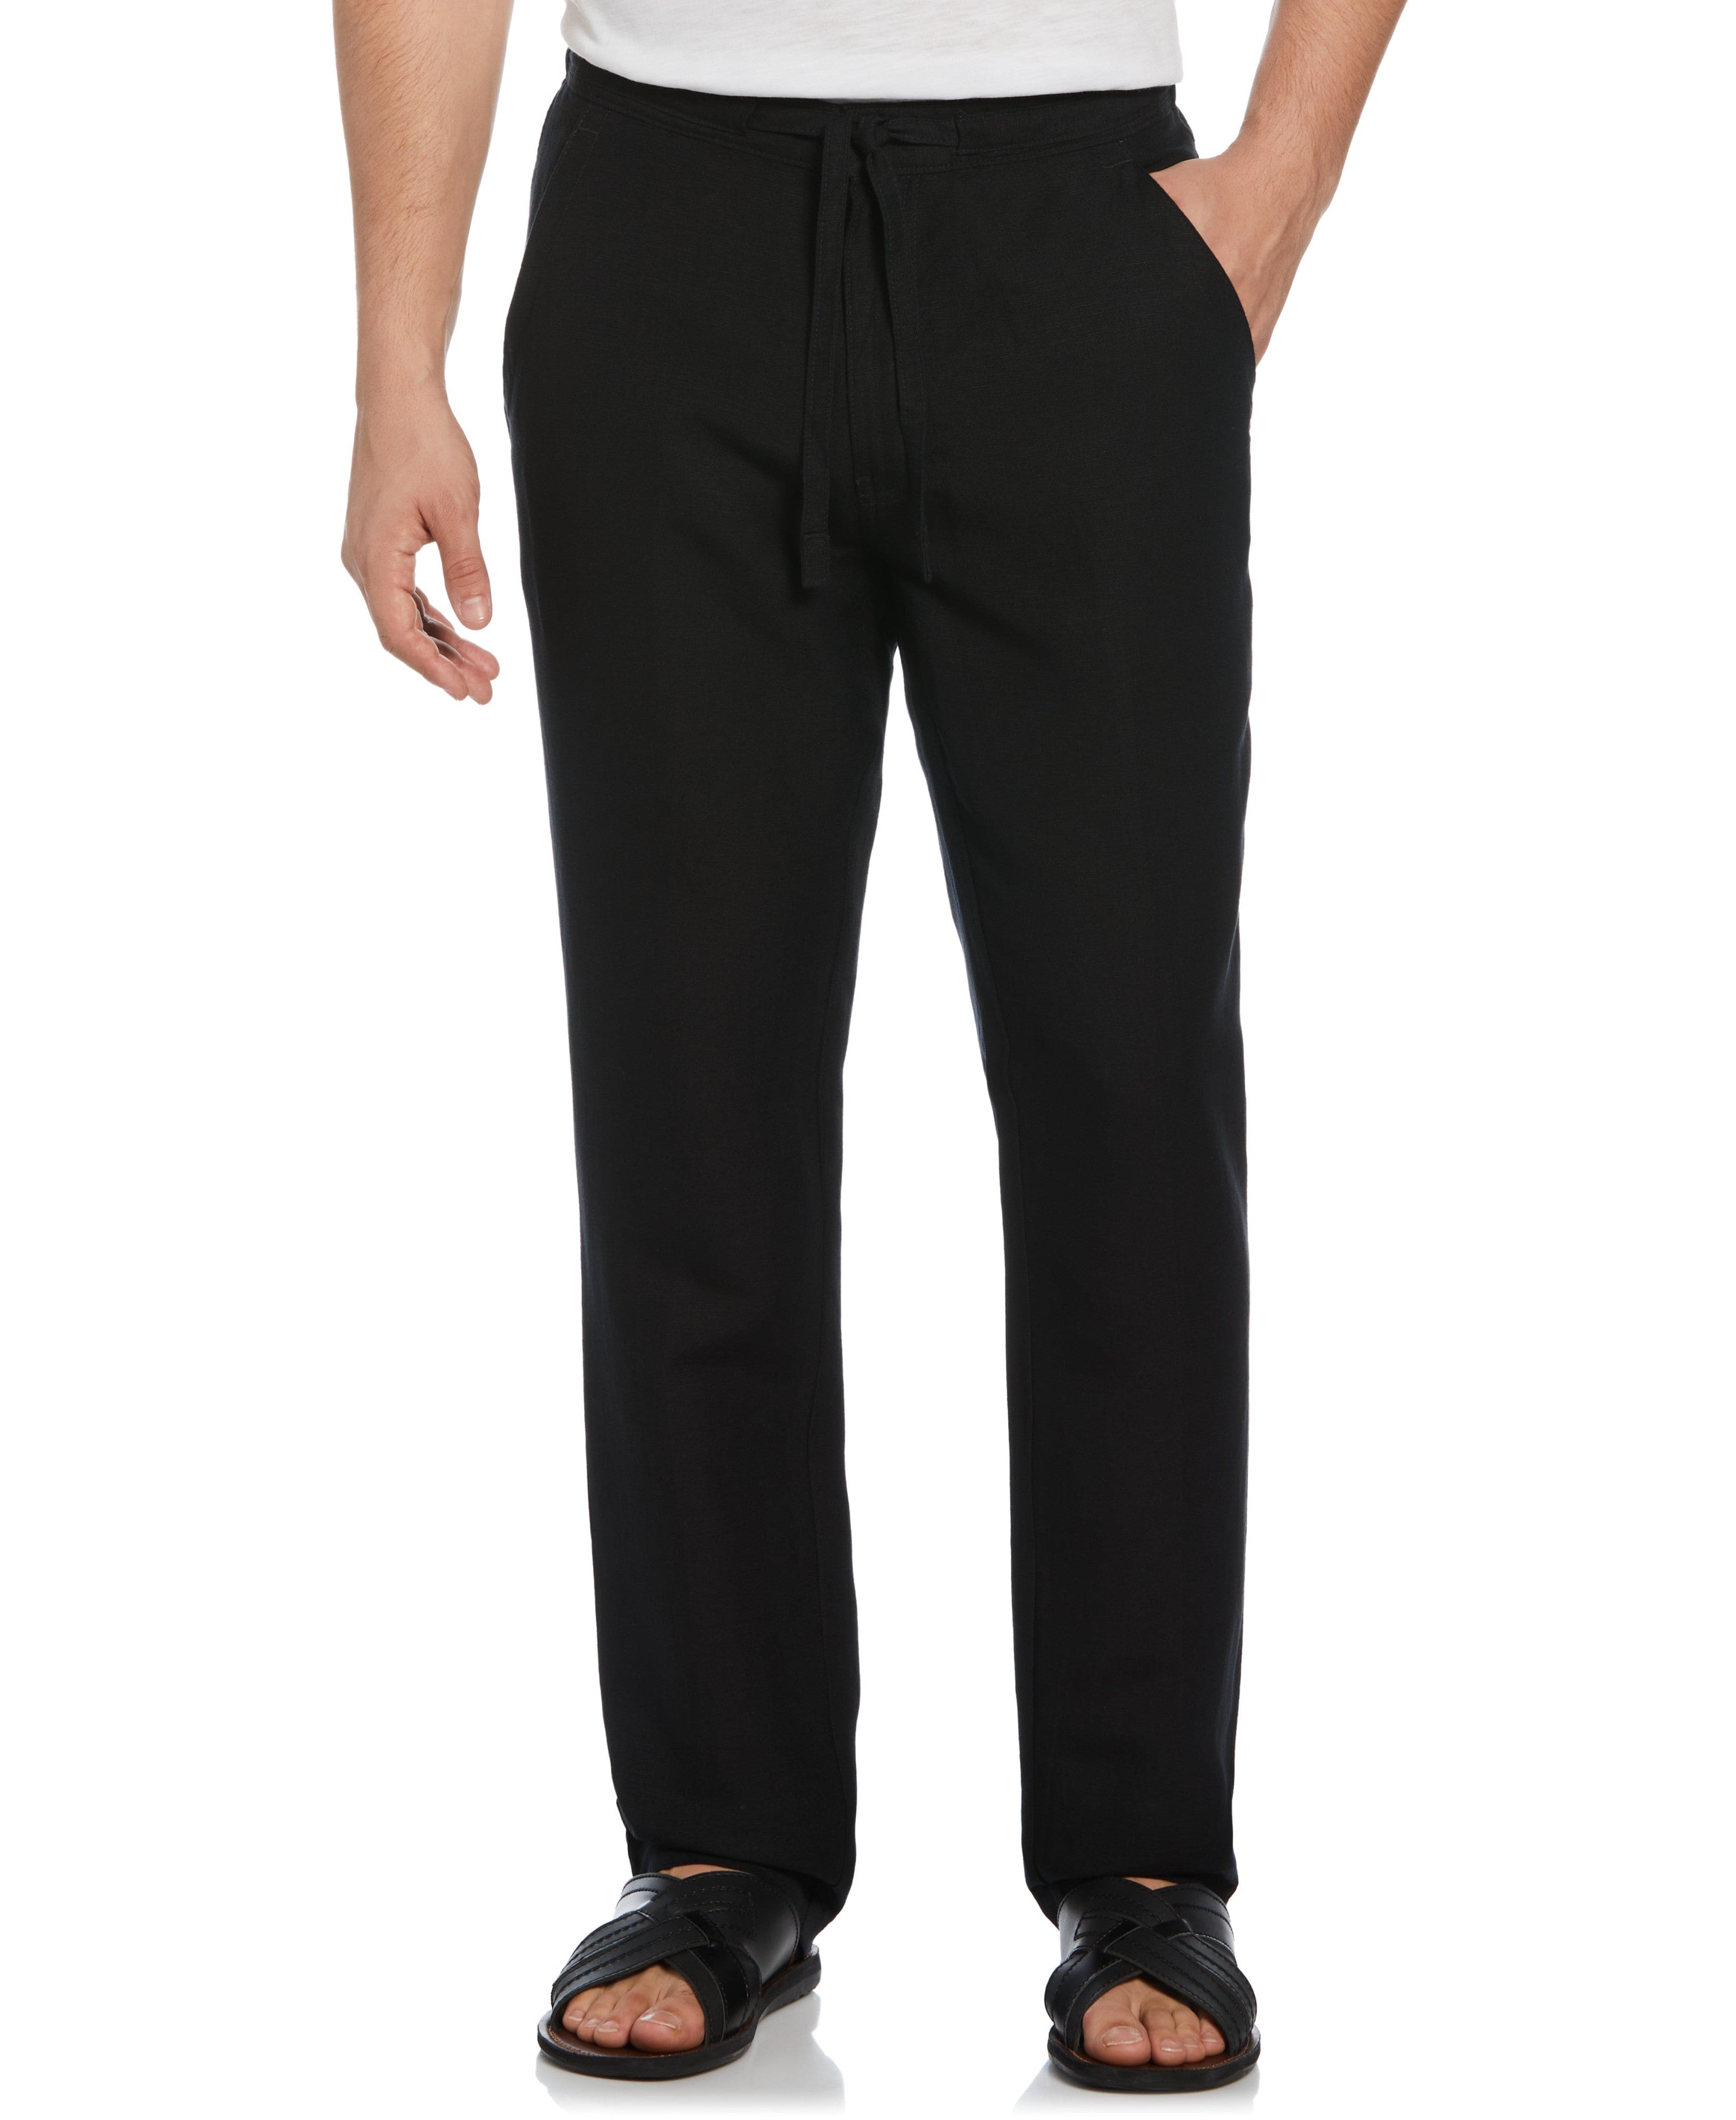 Amazon.com: PASLTER Men's Cotton Linen Pants Casual Elastic Waist Drawstring  Trouser Lightweight Loose Straight-Legs Beach Yoga Pants Apricot :  Clothing, Shoes & Jewelry